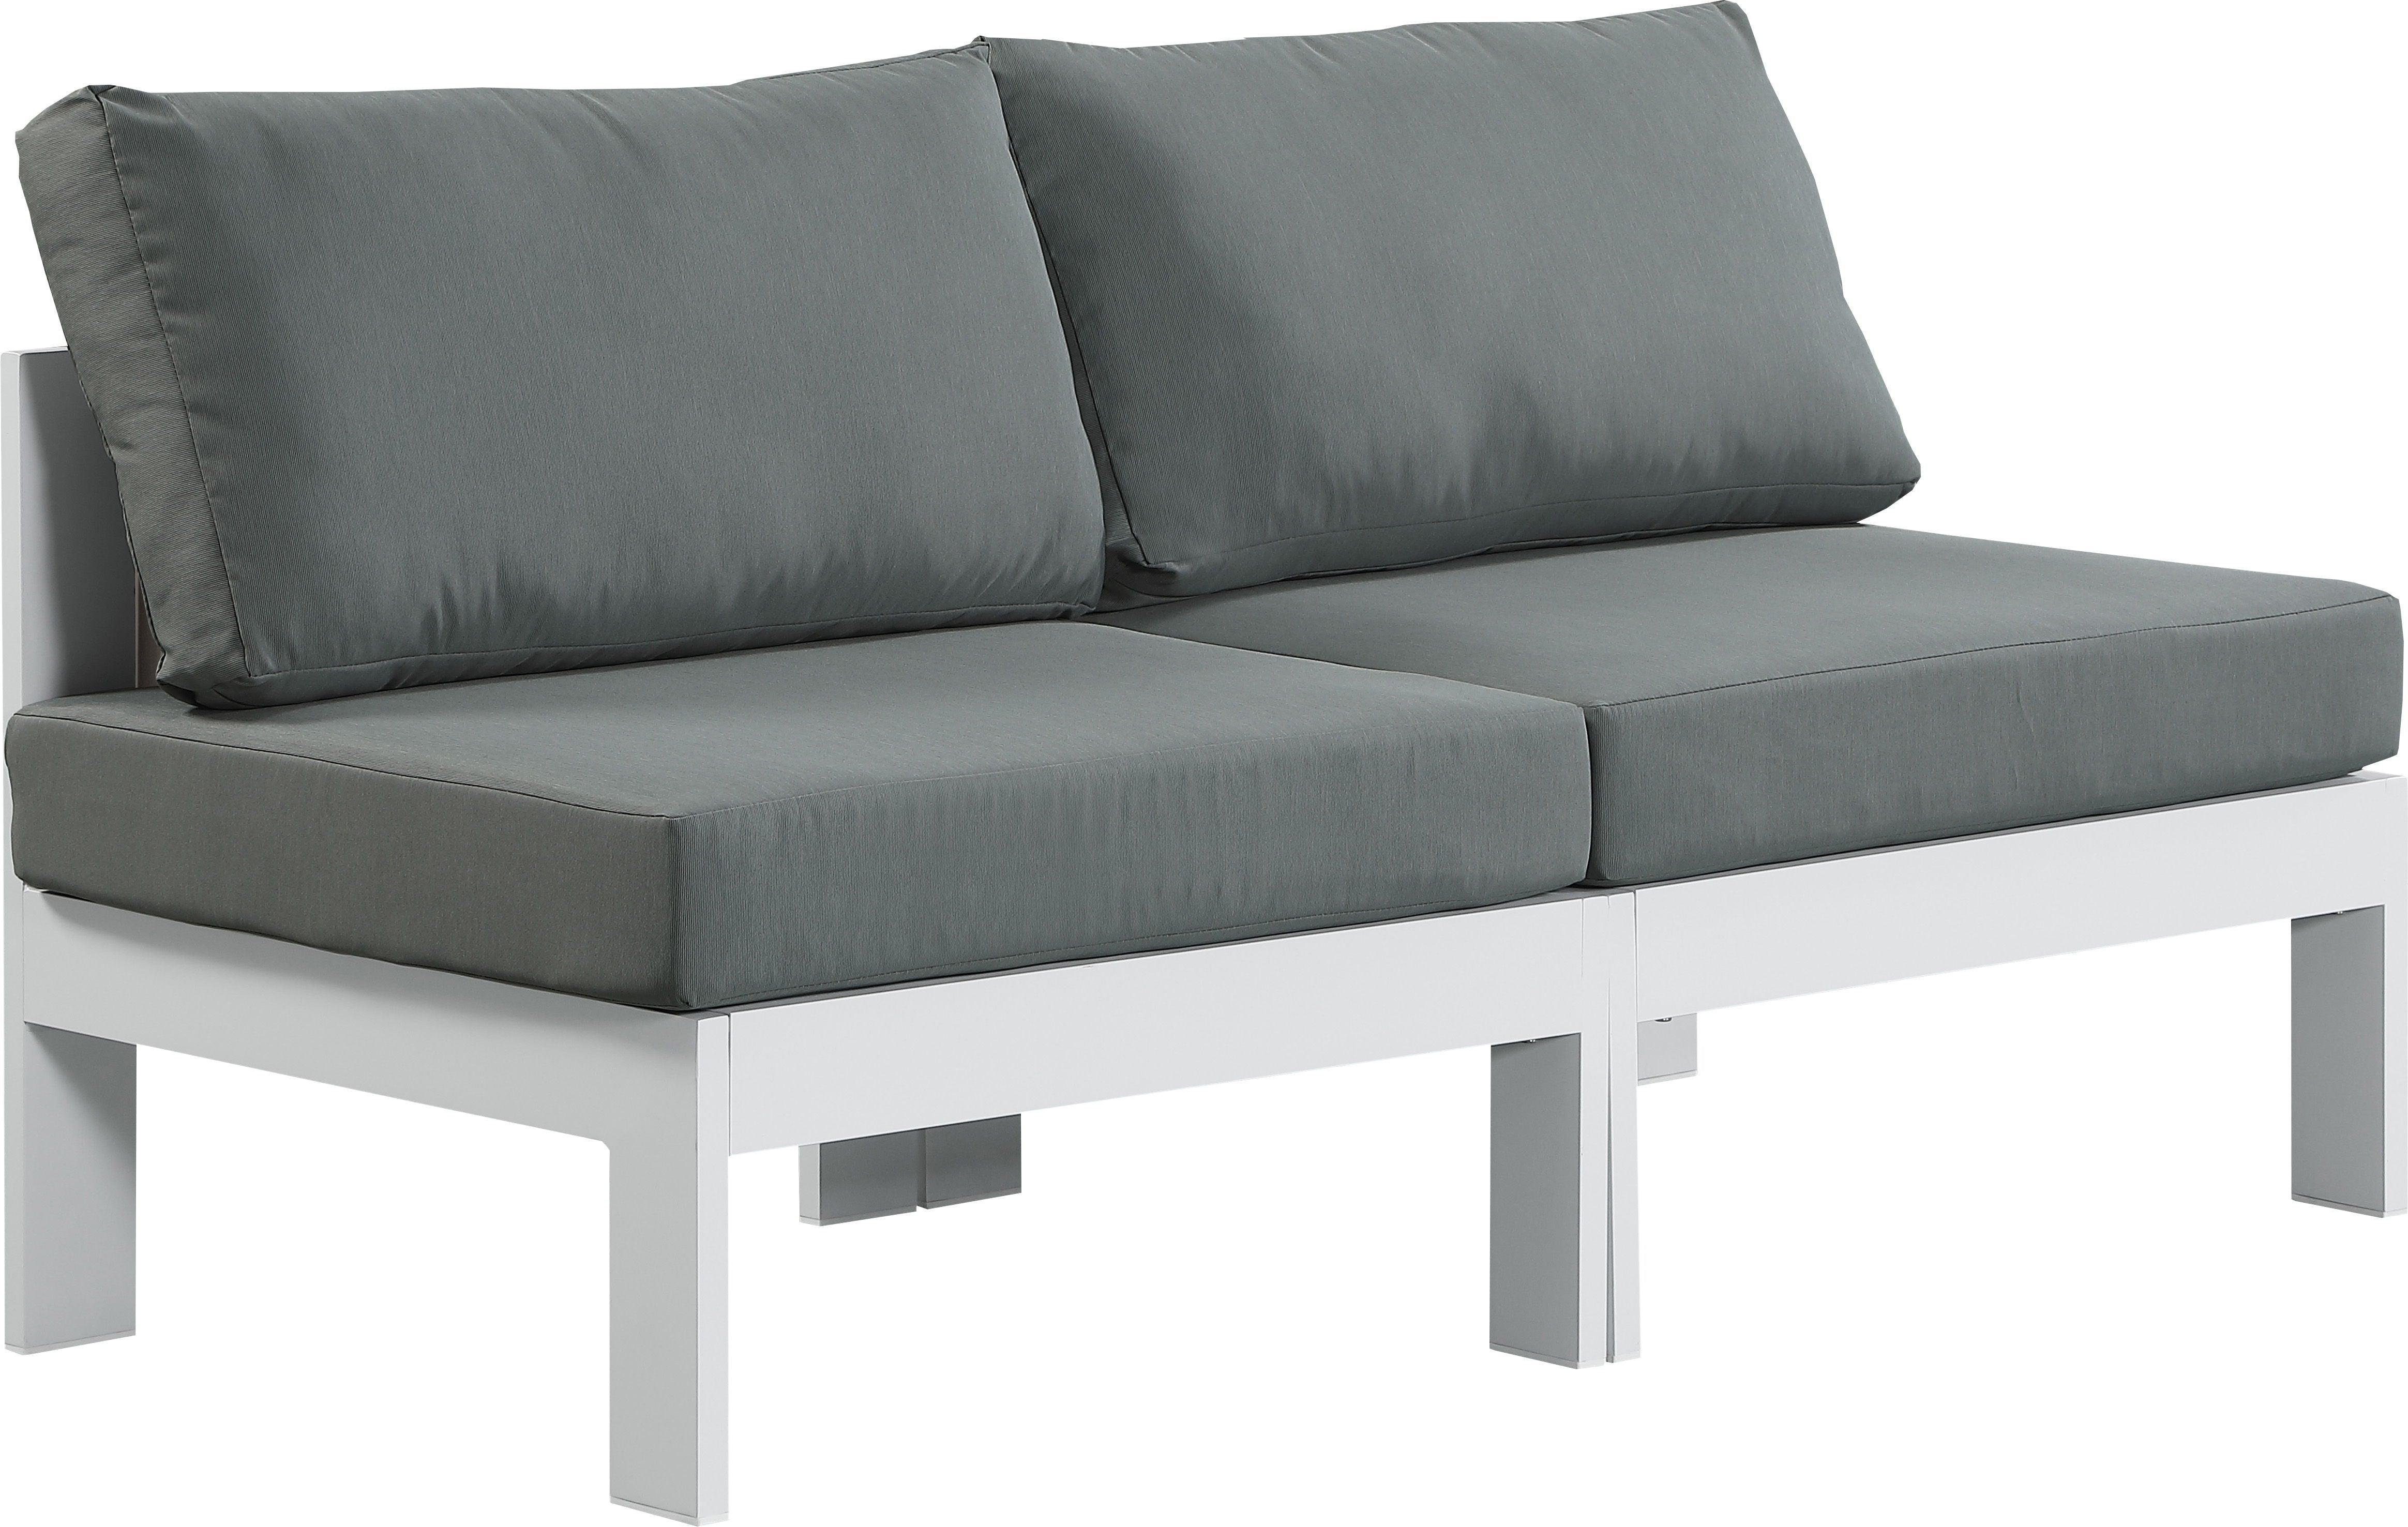 Meridian Furniture - Nizuc - Outdoor Patio Modular Sofa - Grey - Fabric - Modern & Contemporary - 5th Avenue Furniture